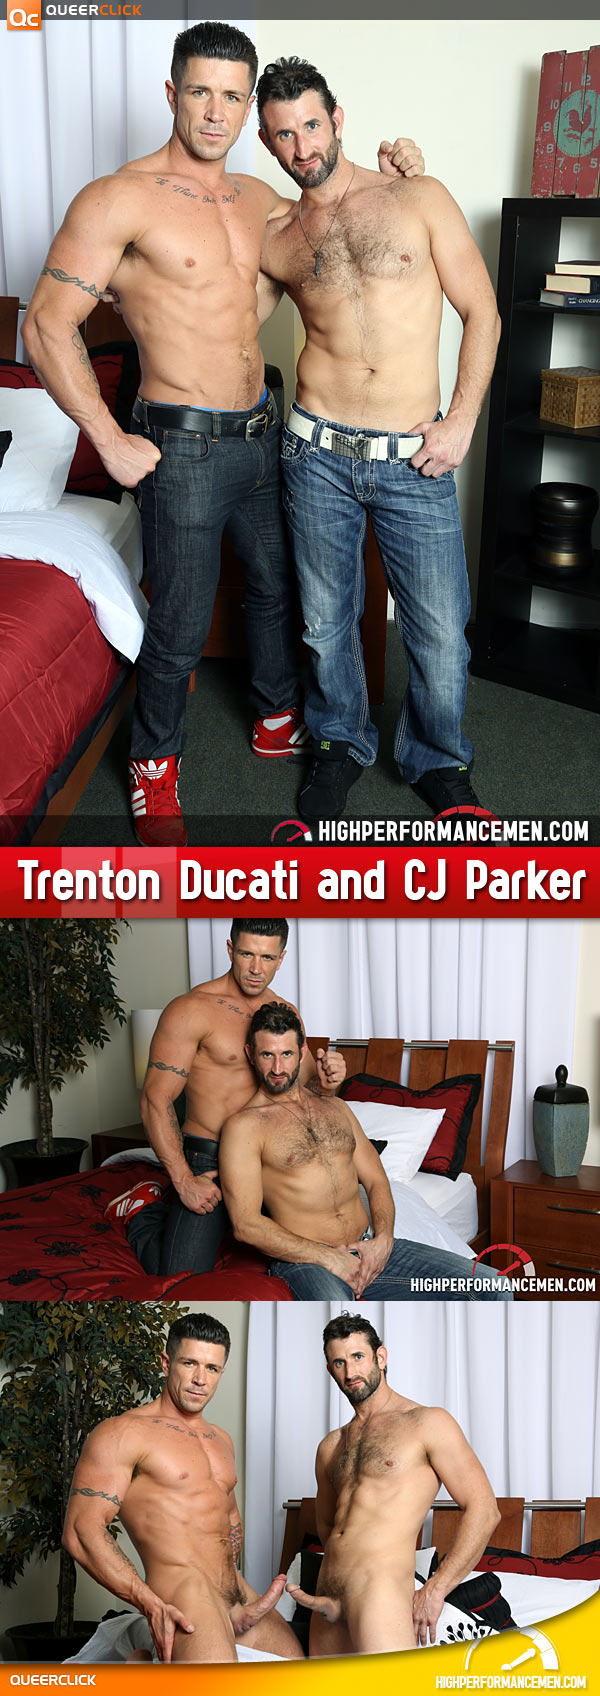 High Performance Men: Trenton Ducati and CJ Parker